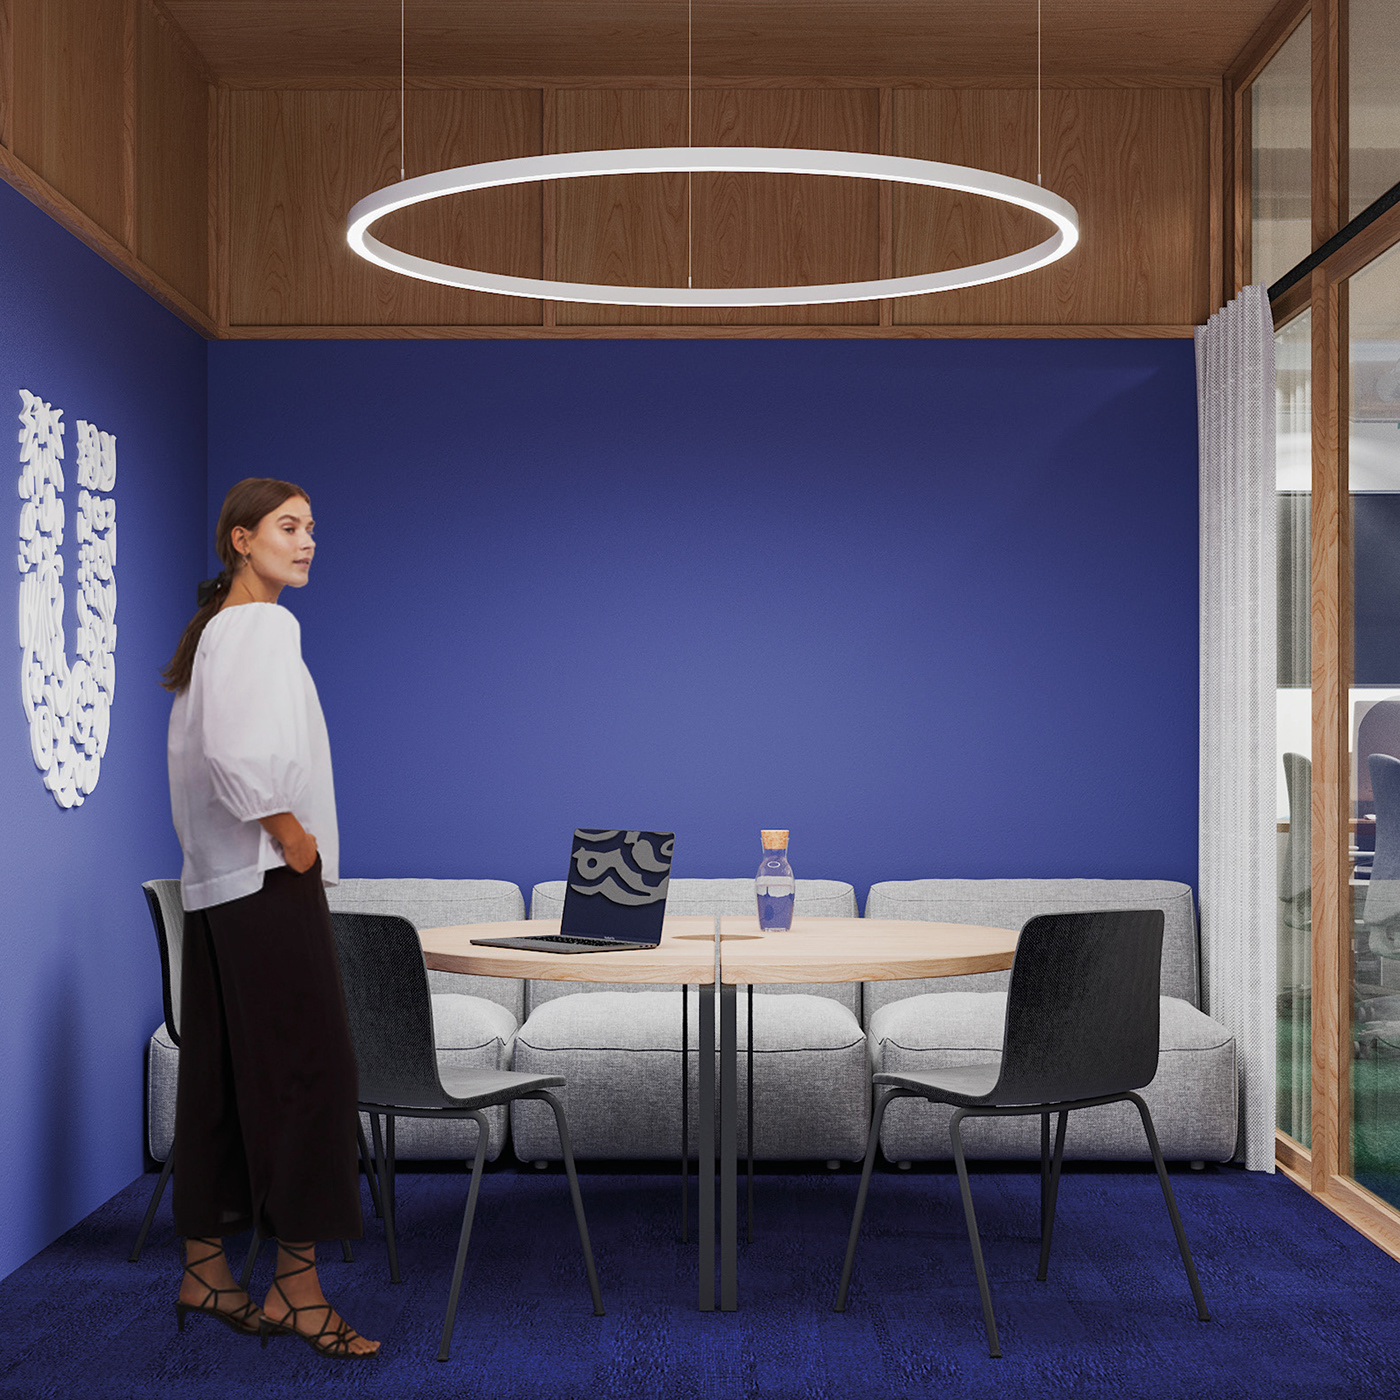 glass interior minimalism meeting room Minimalism Office Office interior openspace Plant wood inerior design